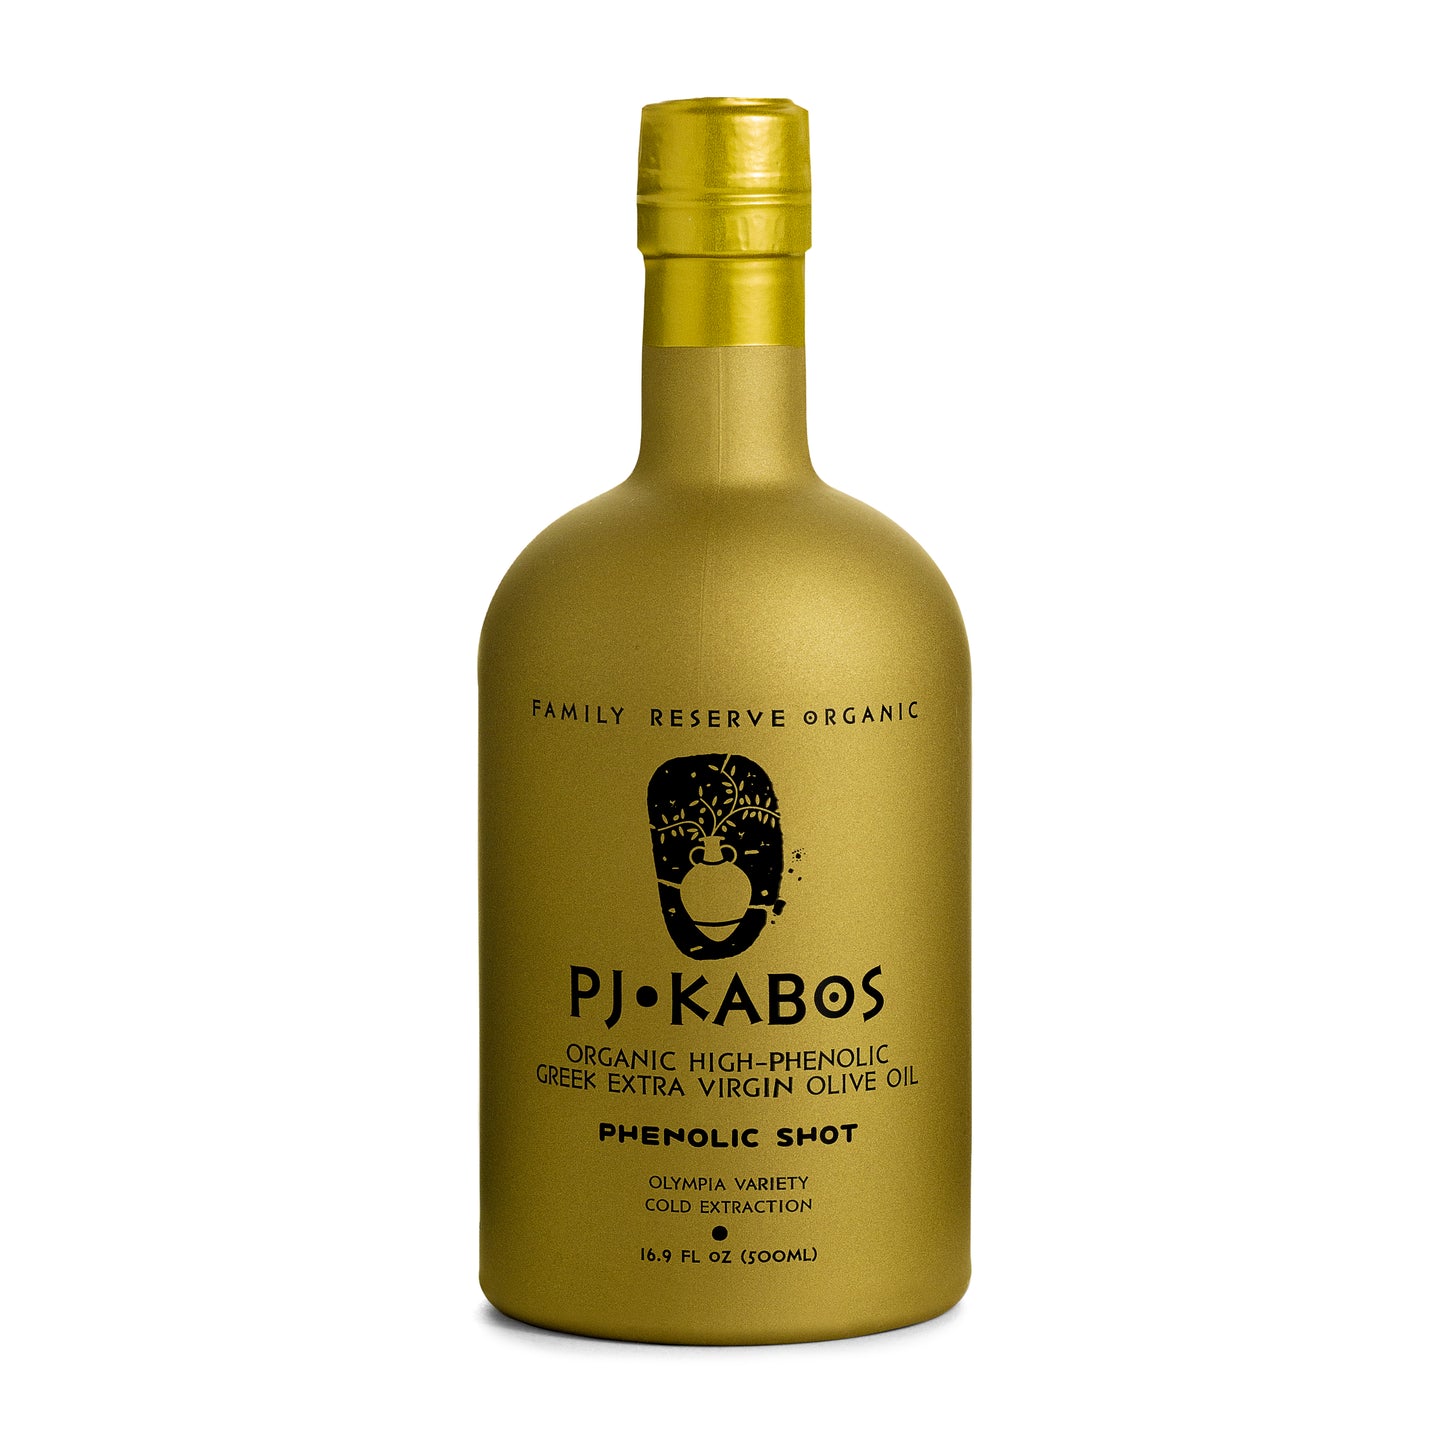 'Family Reserve Organic - Phenolic Shot' Extra Virgin Olive Oil 16.9floz Bottle